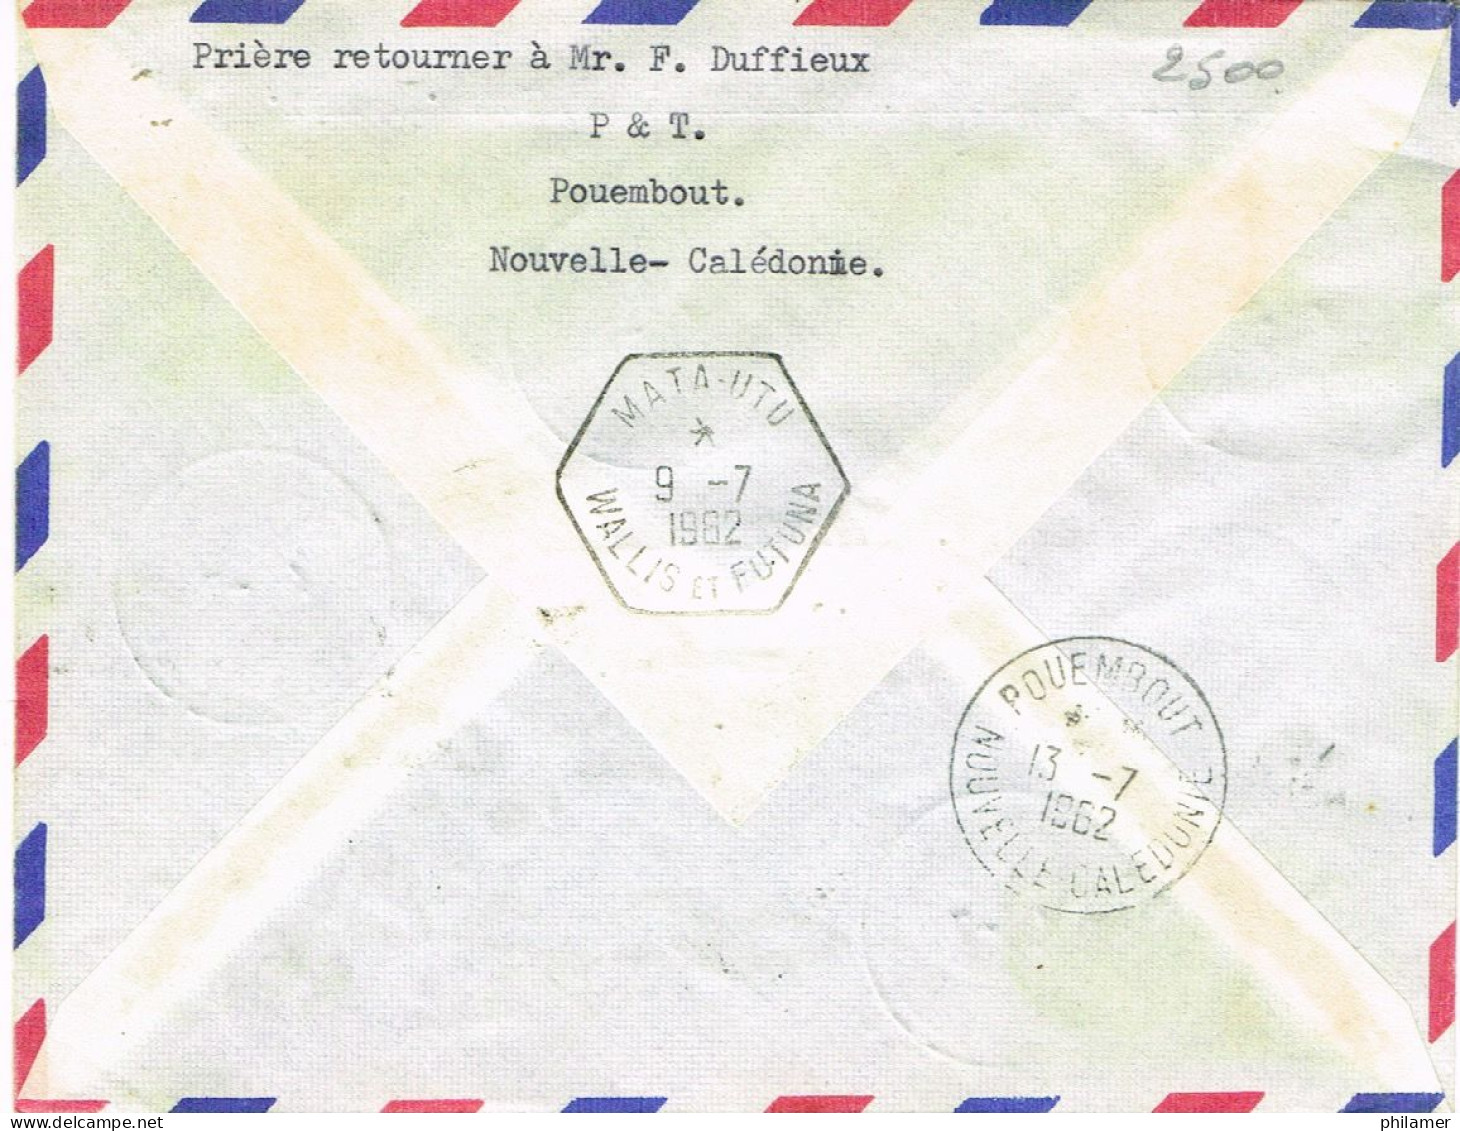 Wallis Futuna Nouvelle Caledonie FFC Premier Vol Aerien Noumea Mata Utu 4/7/62 Us Courant - Briefe U. Dokumente